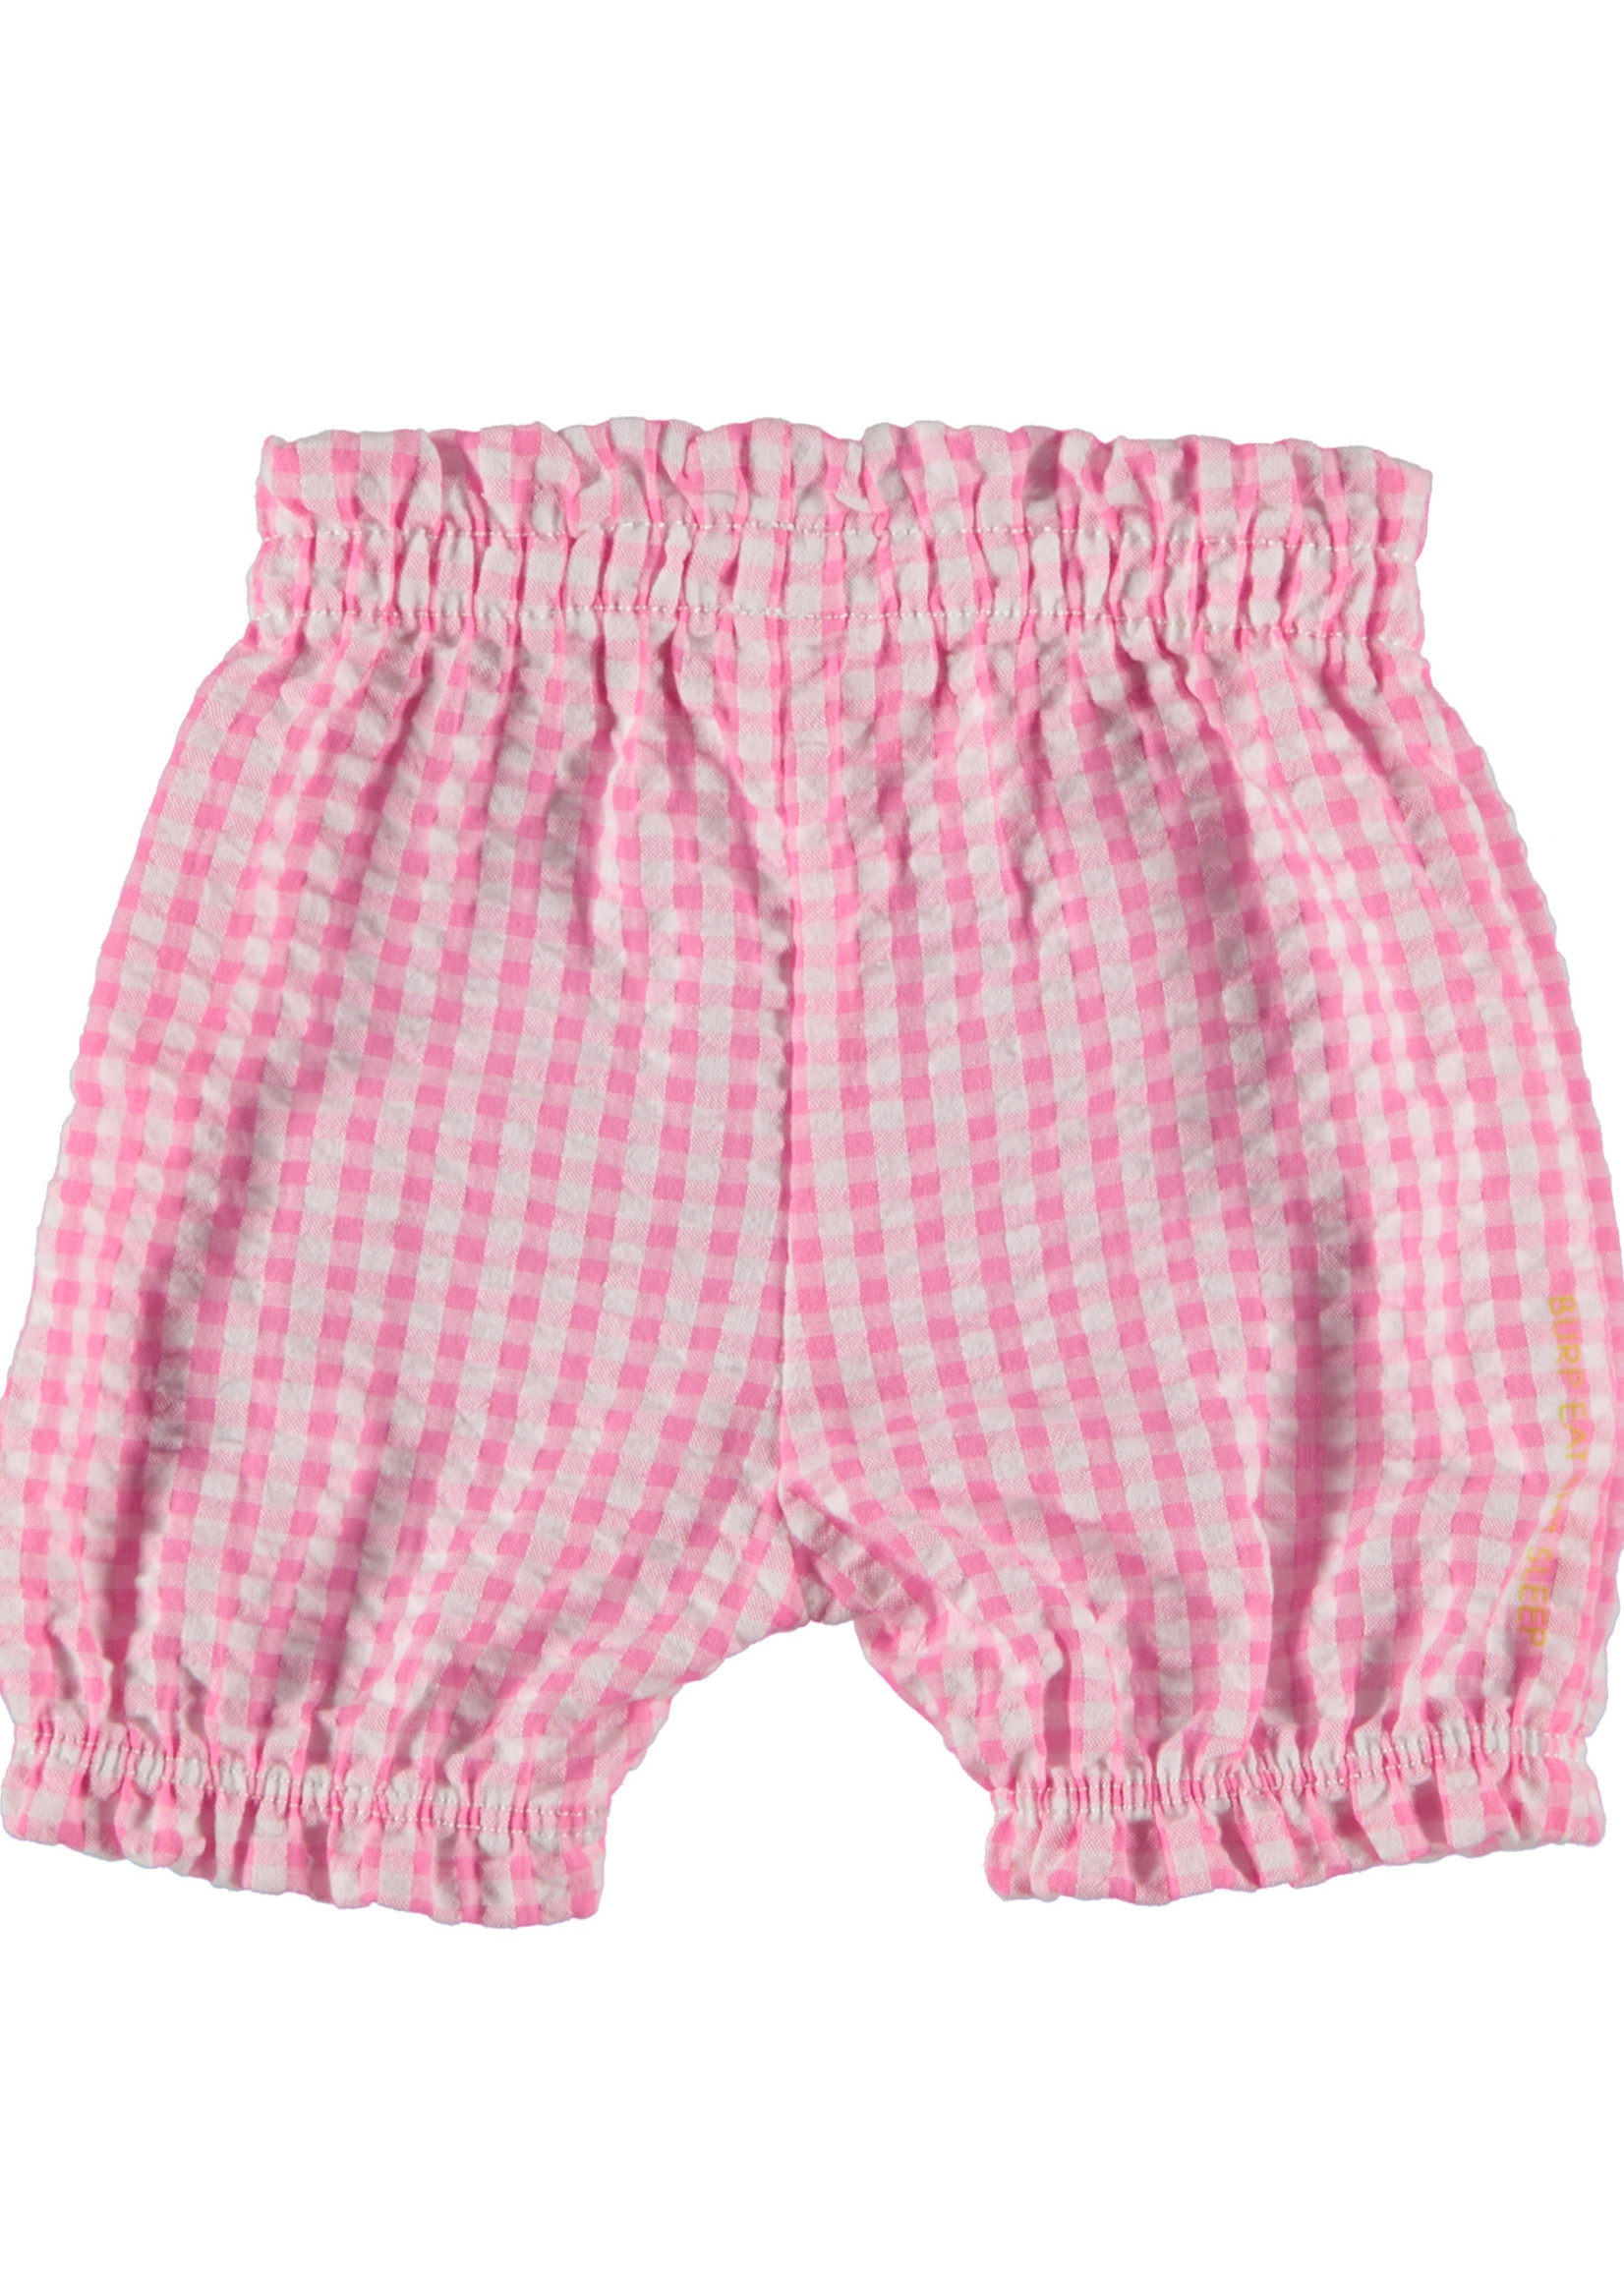 B.E.S.S. Shorts Vichy, Pink